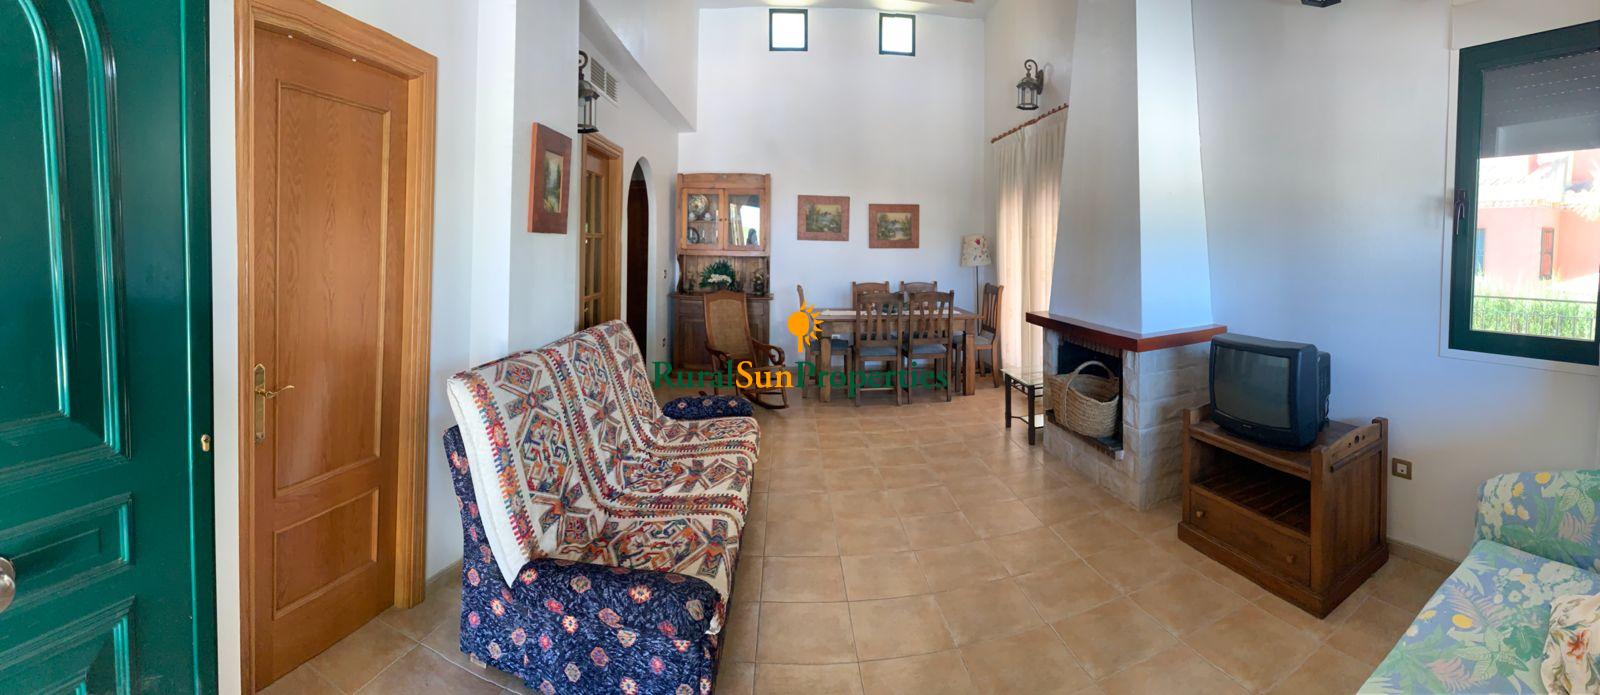 Inmaculate Single Storey Villa for sale in Calasparra. Devolepment Cañada Verde-Valle del Sol.